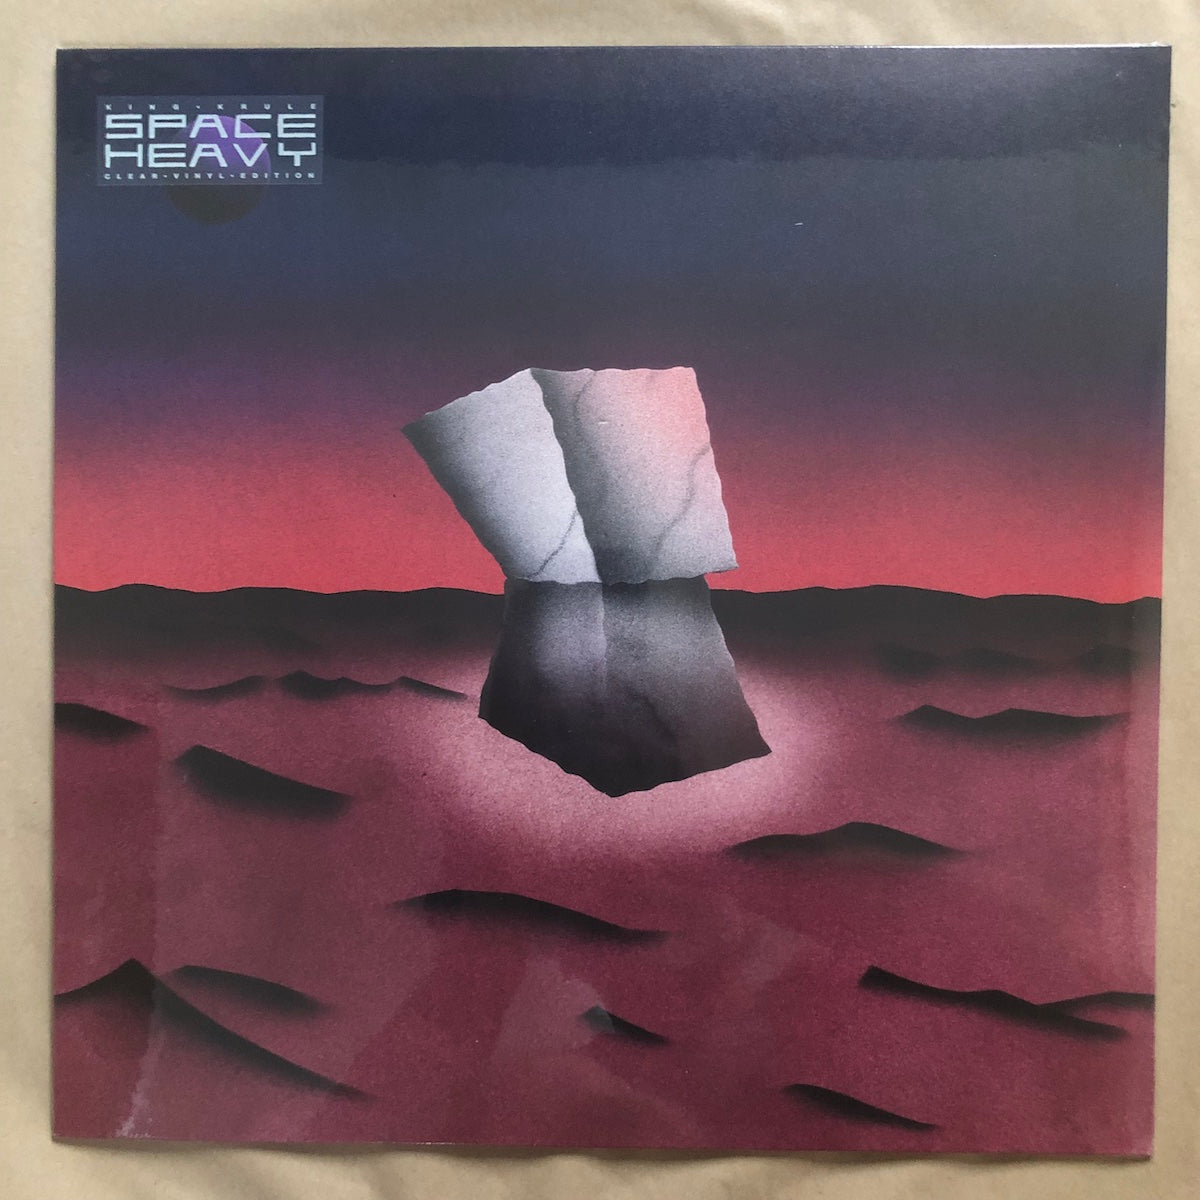 Space Heavy: Clear Vinyl LP